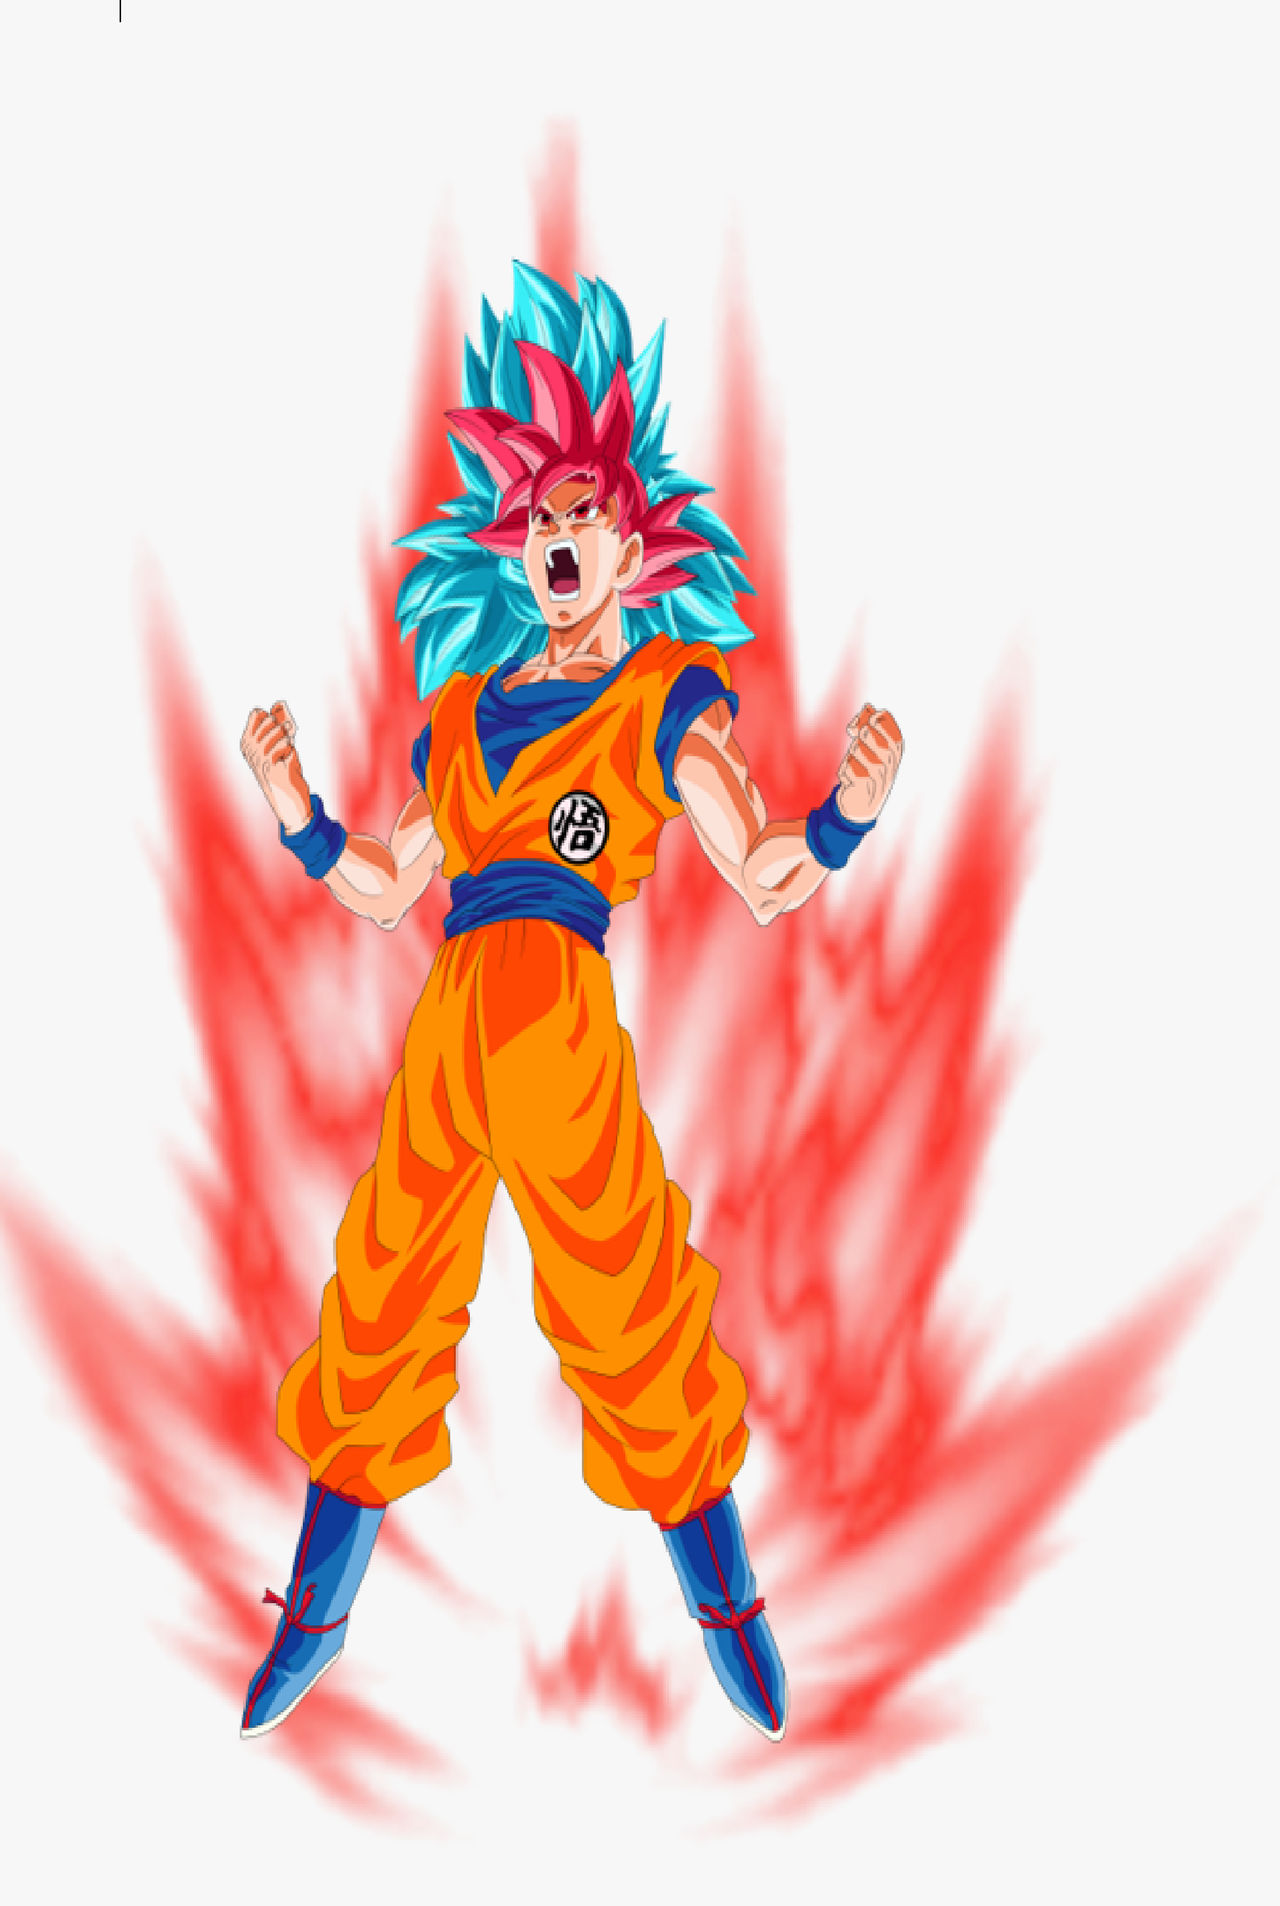 Goku SSJ Dios de Dioses Ascendido Blue by MayoSSJ20000 on DeviantArt